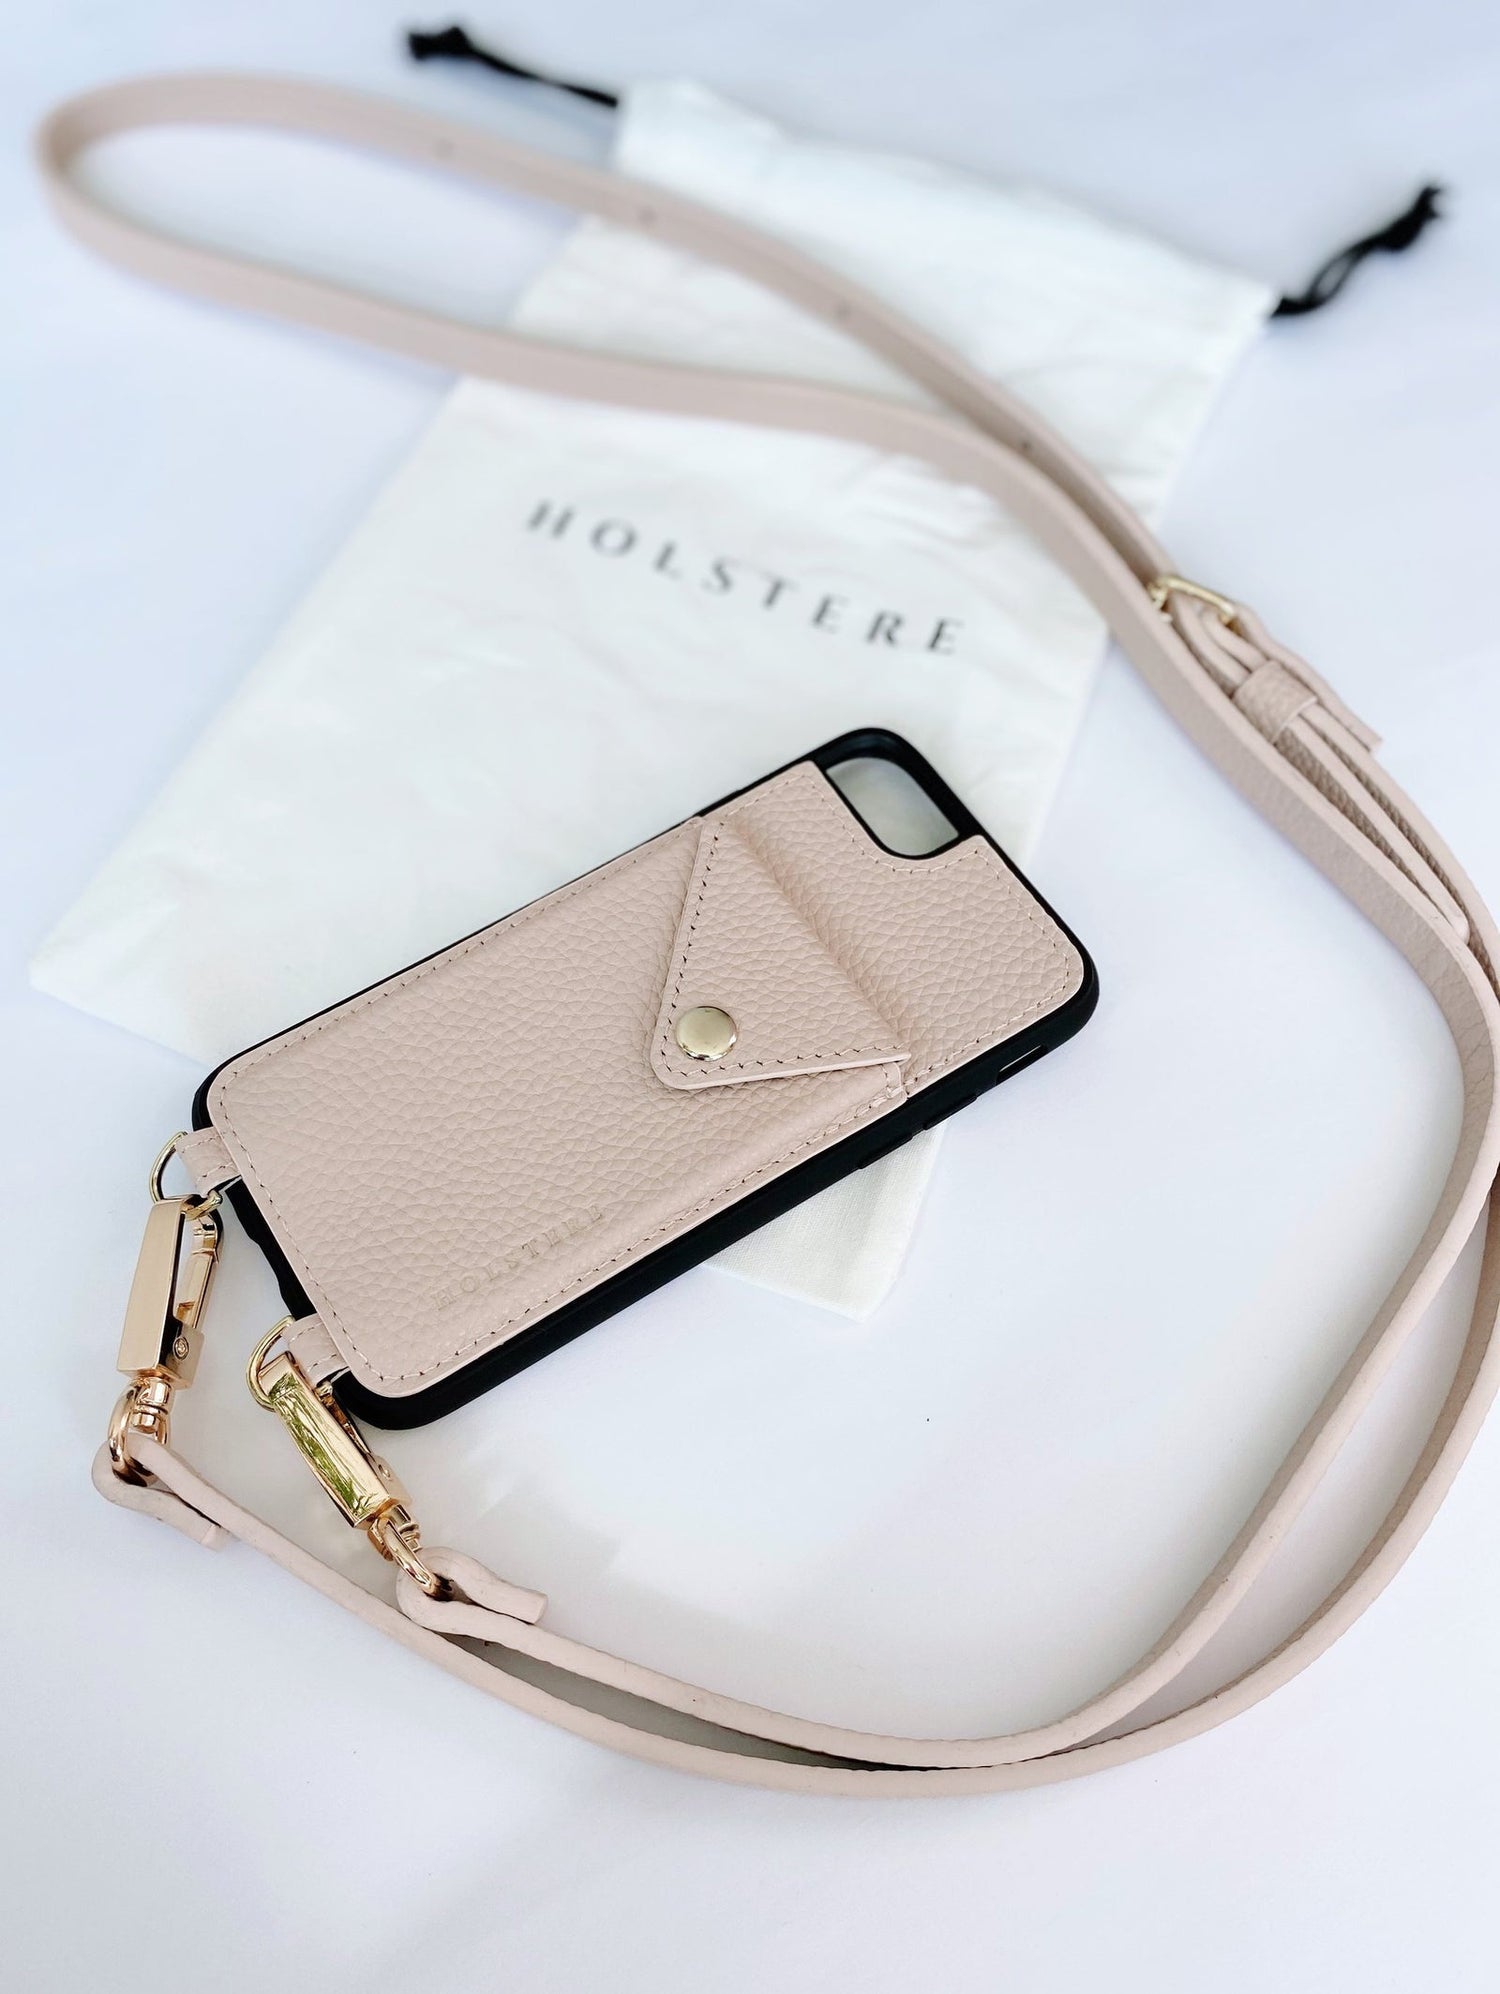 Holstere Manhattan Cream iPhone pouch w/ Gold Hardware